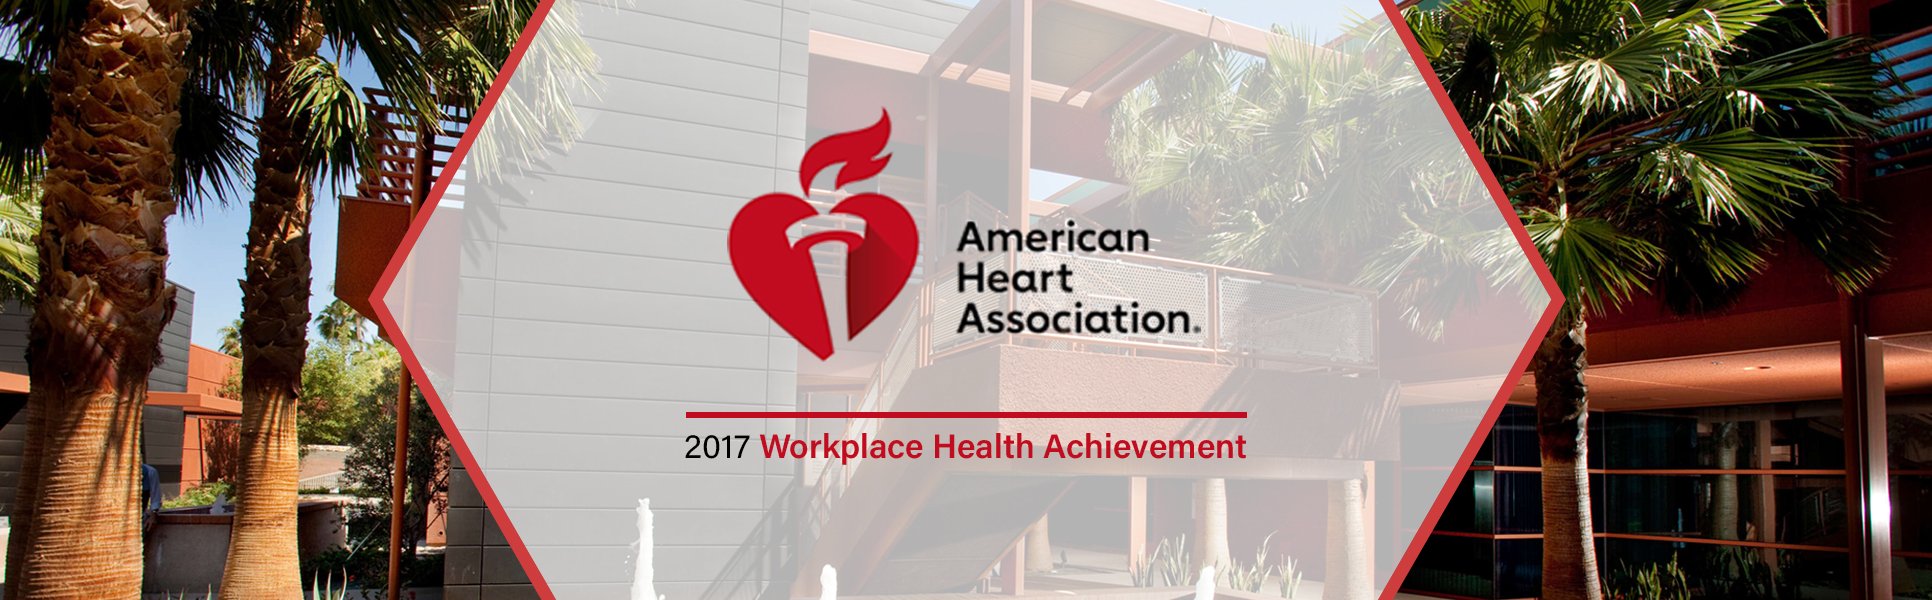 American Heart Association Workplace Health Achievement | DOHC